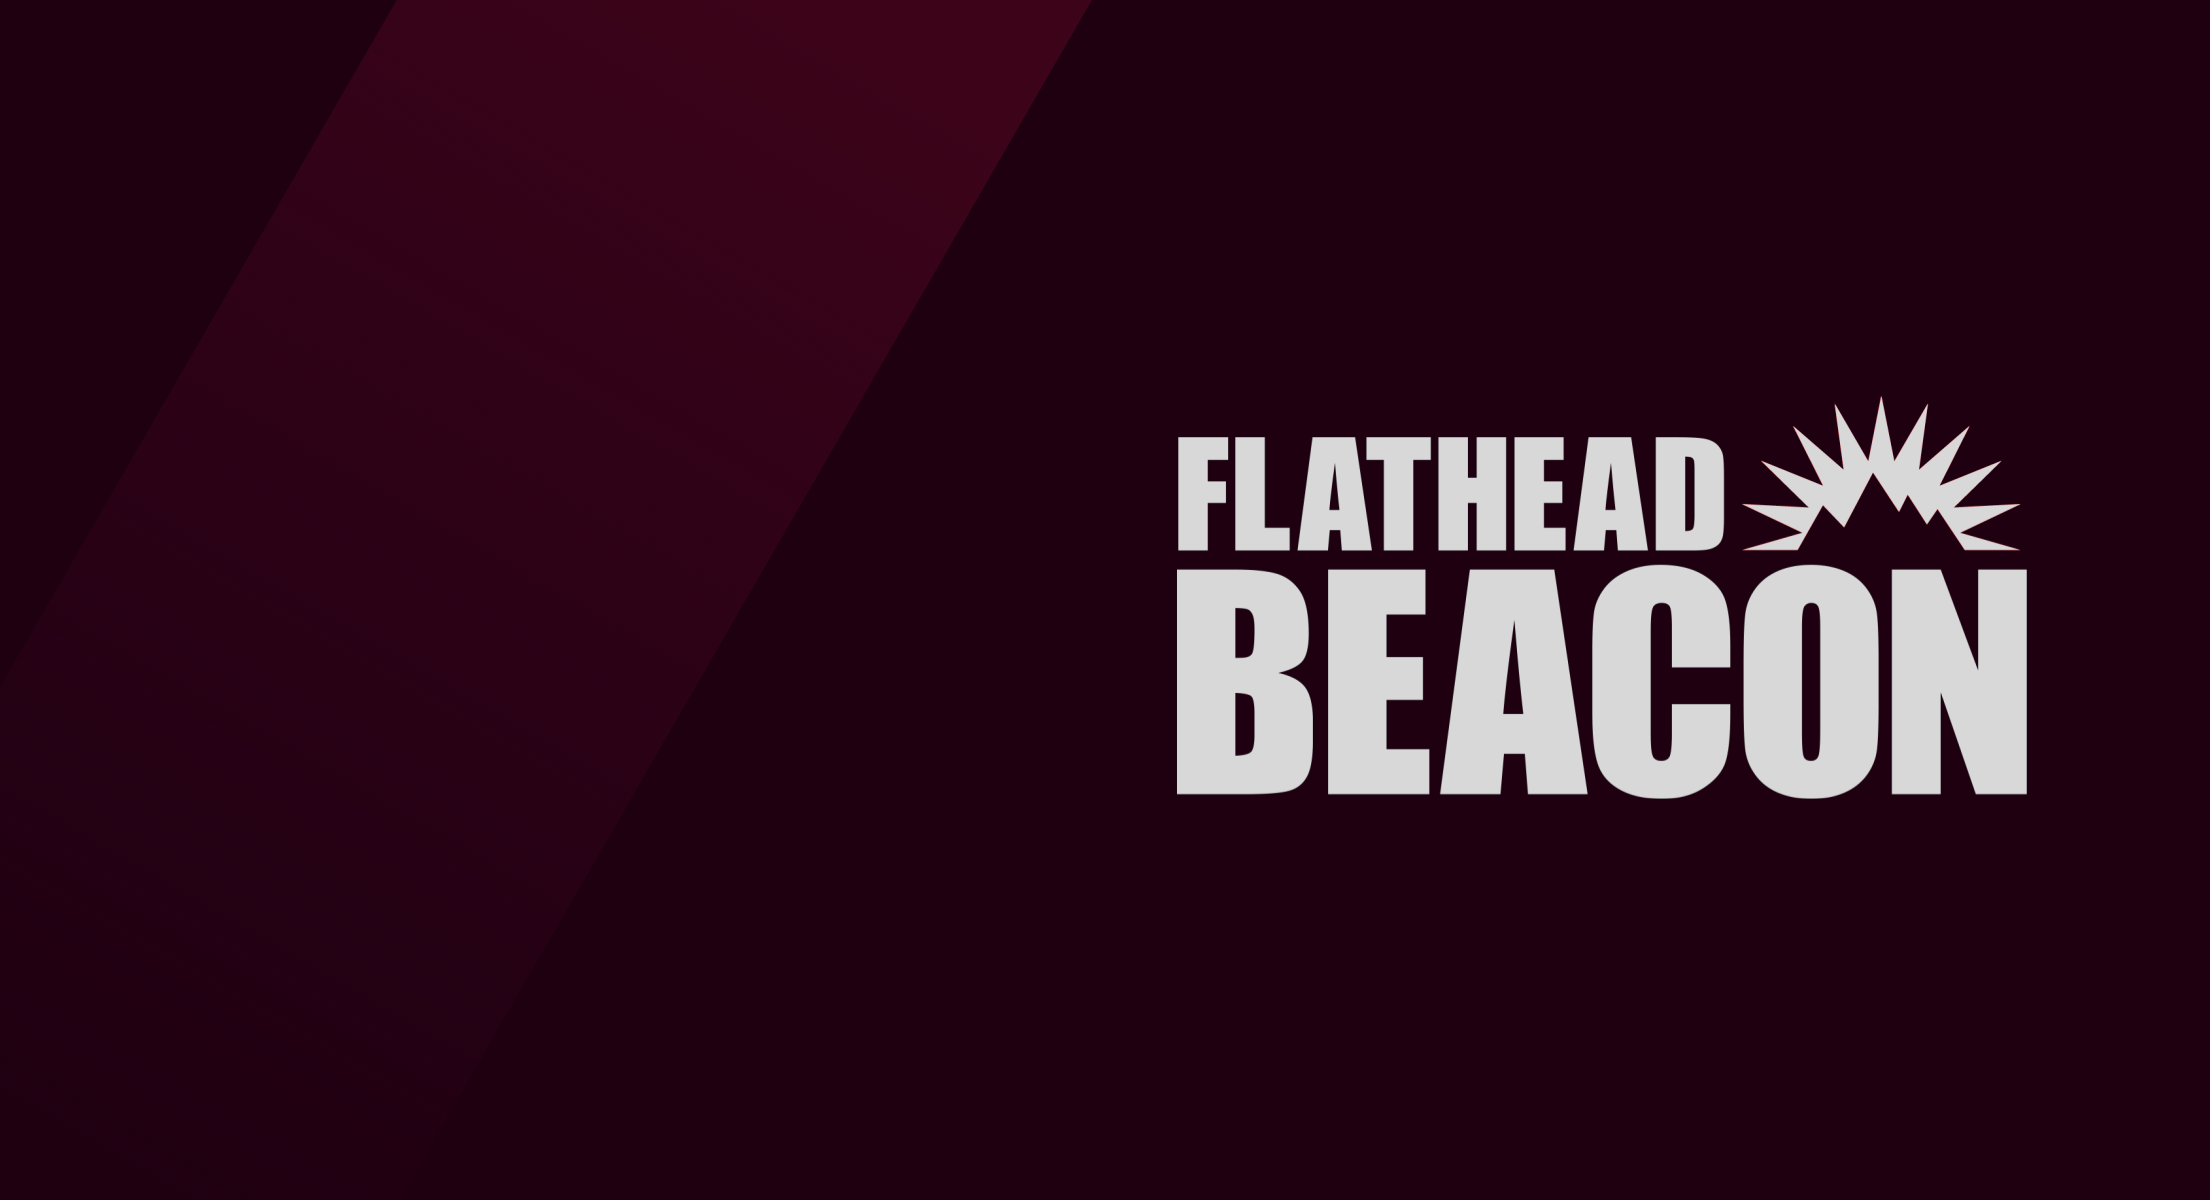 Flathead Beacon: Revolutionizing the Digital Journey